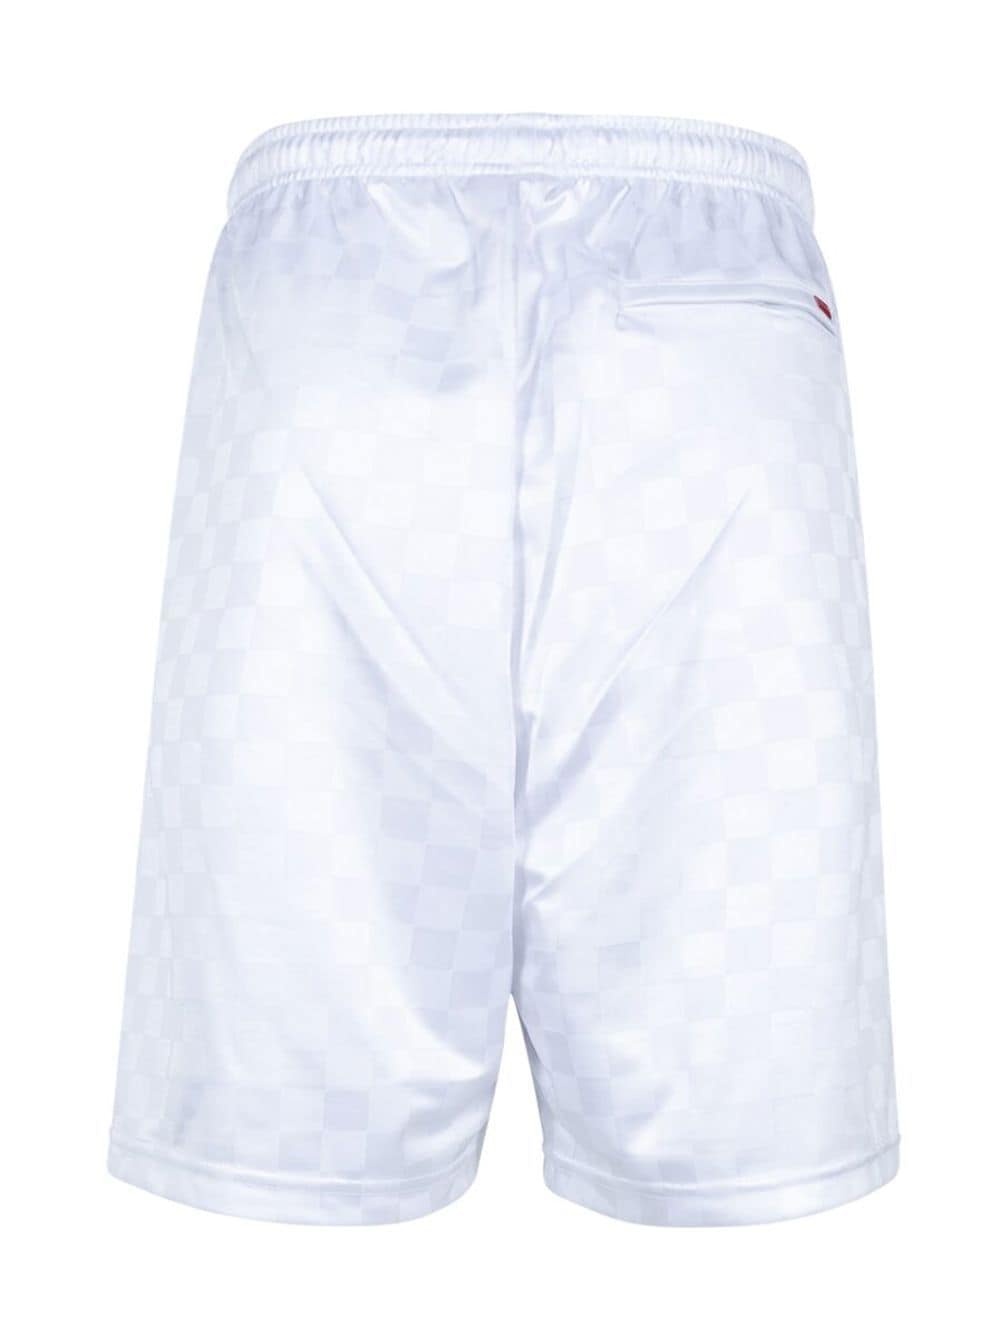 x Umbro soccer shorts - 2